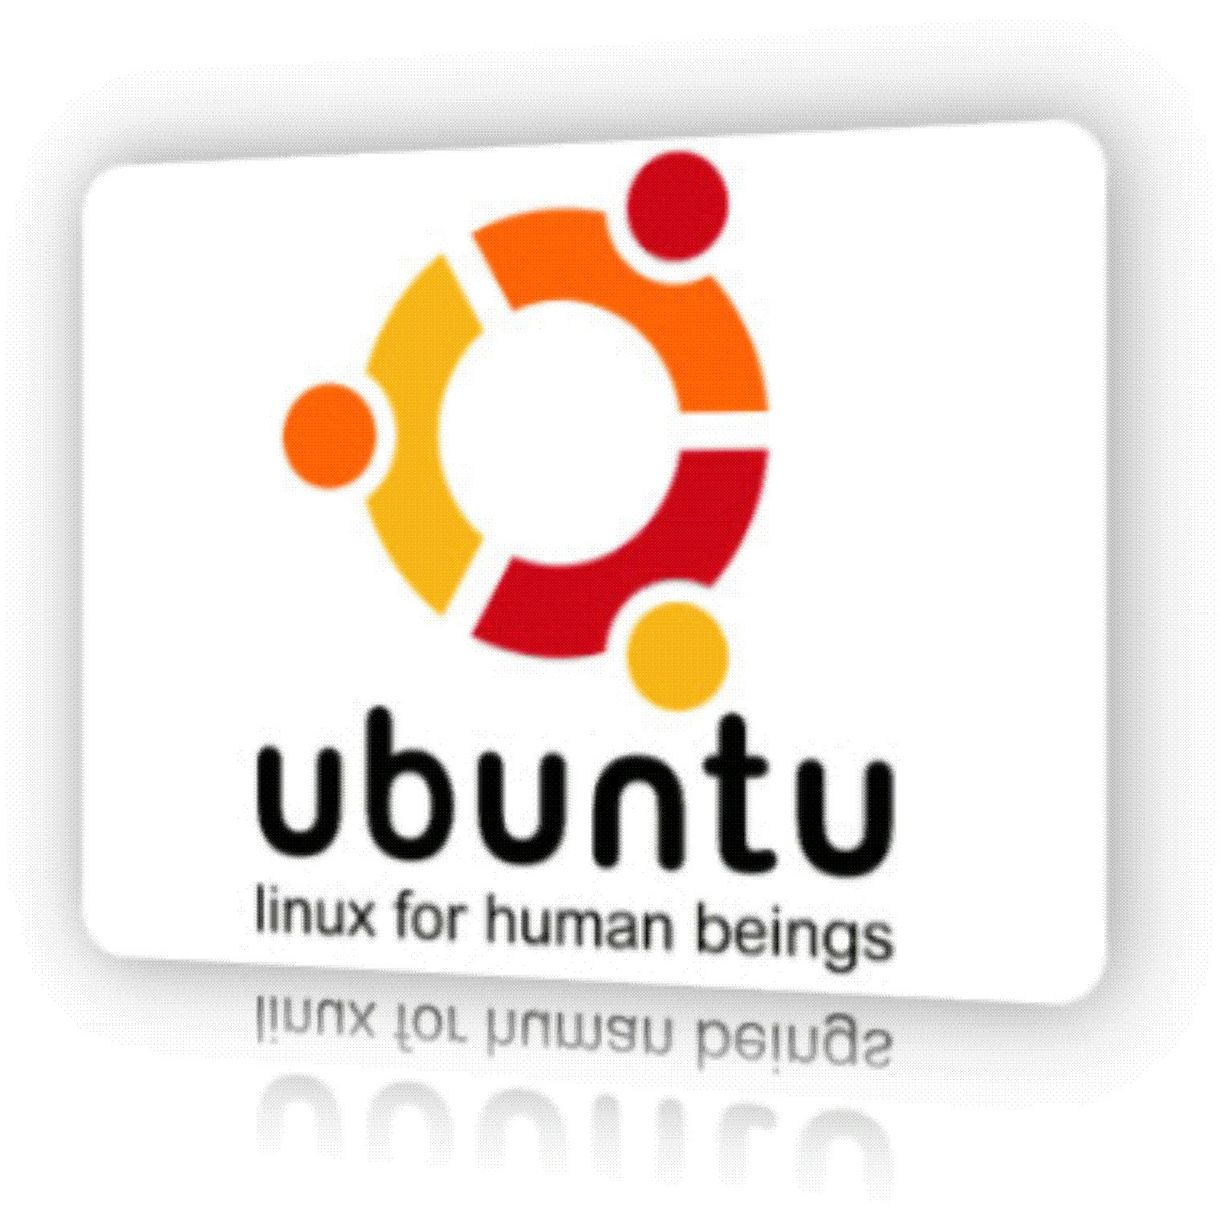 Vk linux. Ubuntu 9.10. Ubuntu 9.04. Ubuntu Netbook.